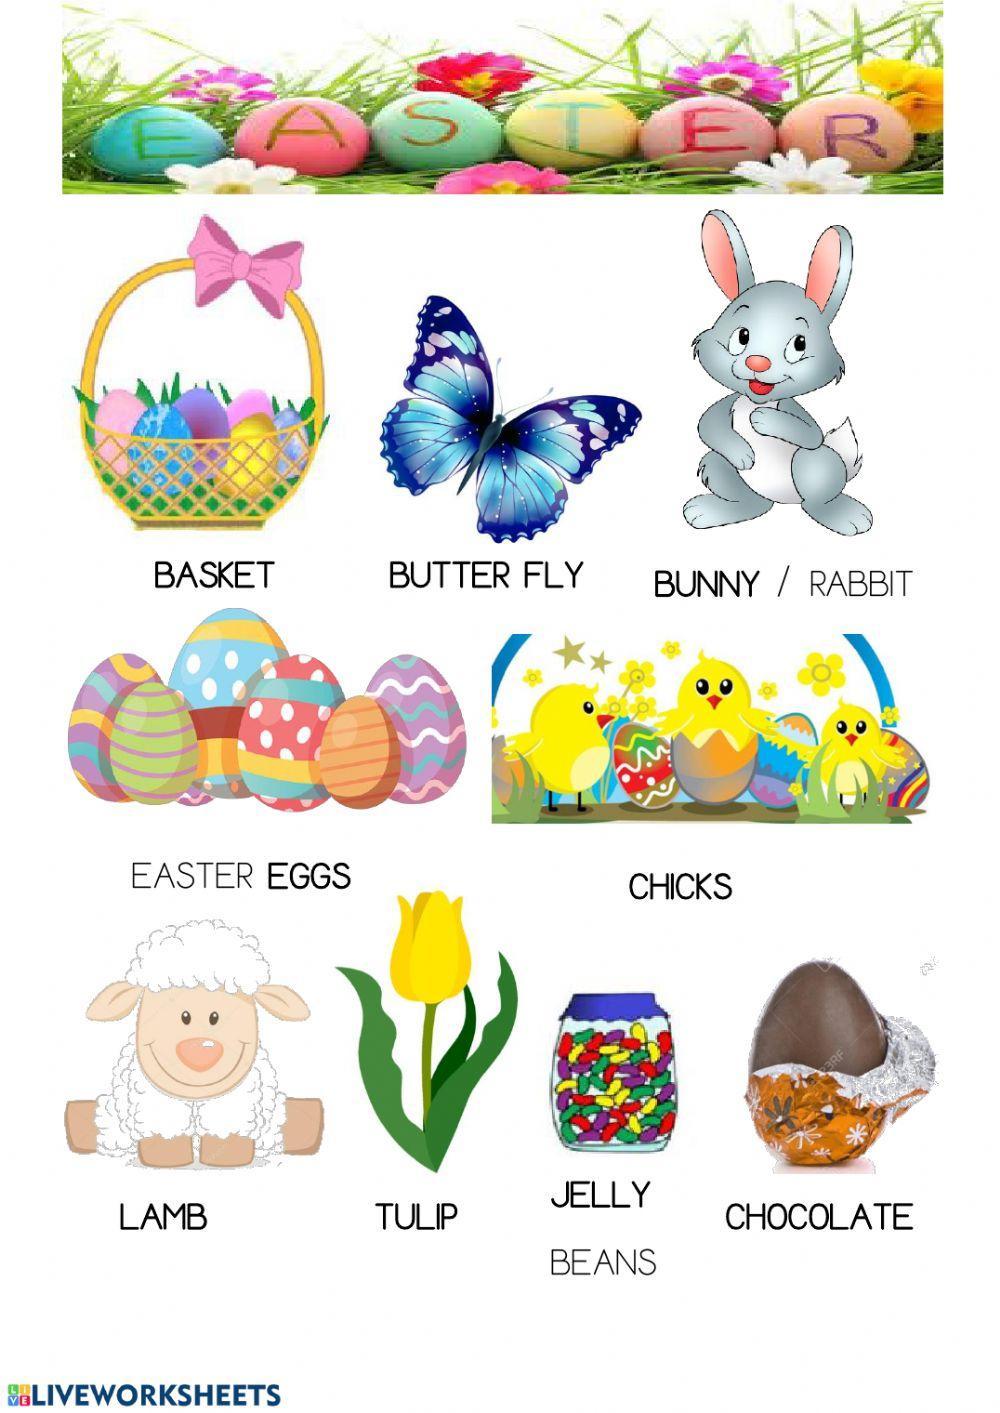 Easter vocabulary